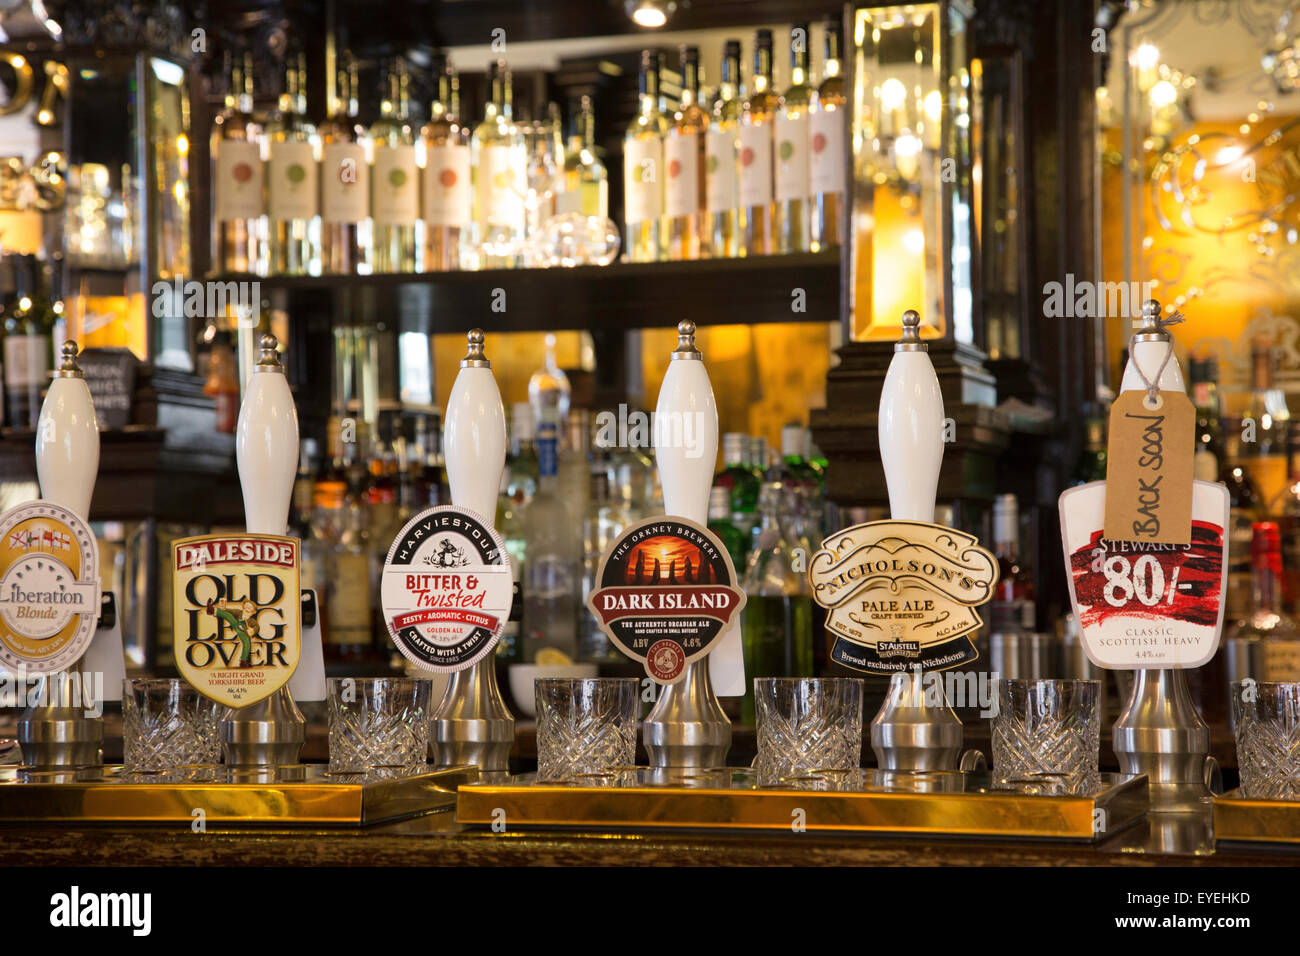 Traditional draft beers on display, England, UK Stock Photo